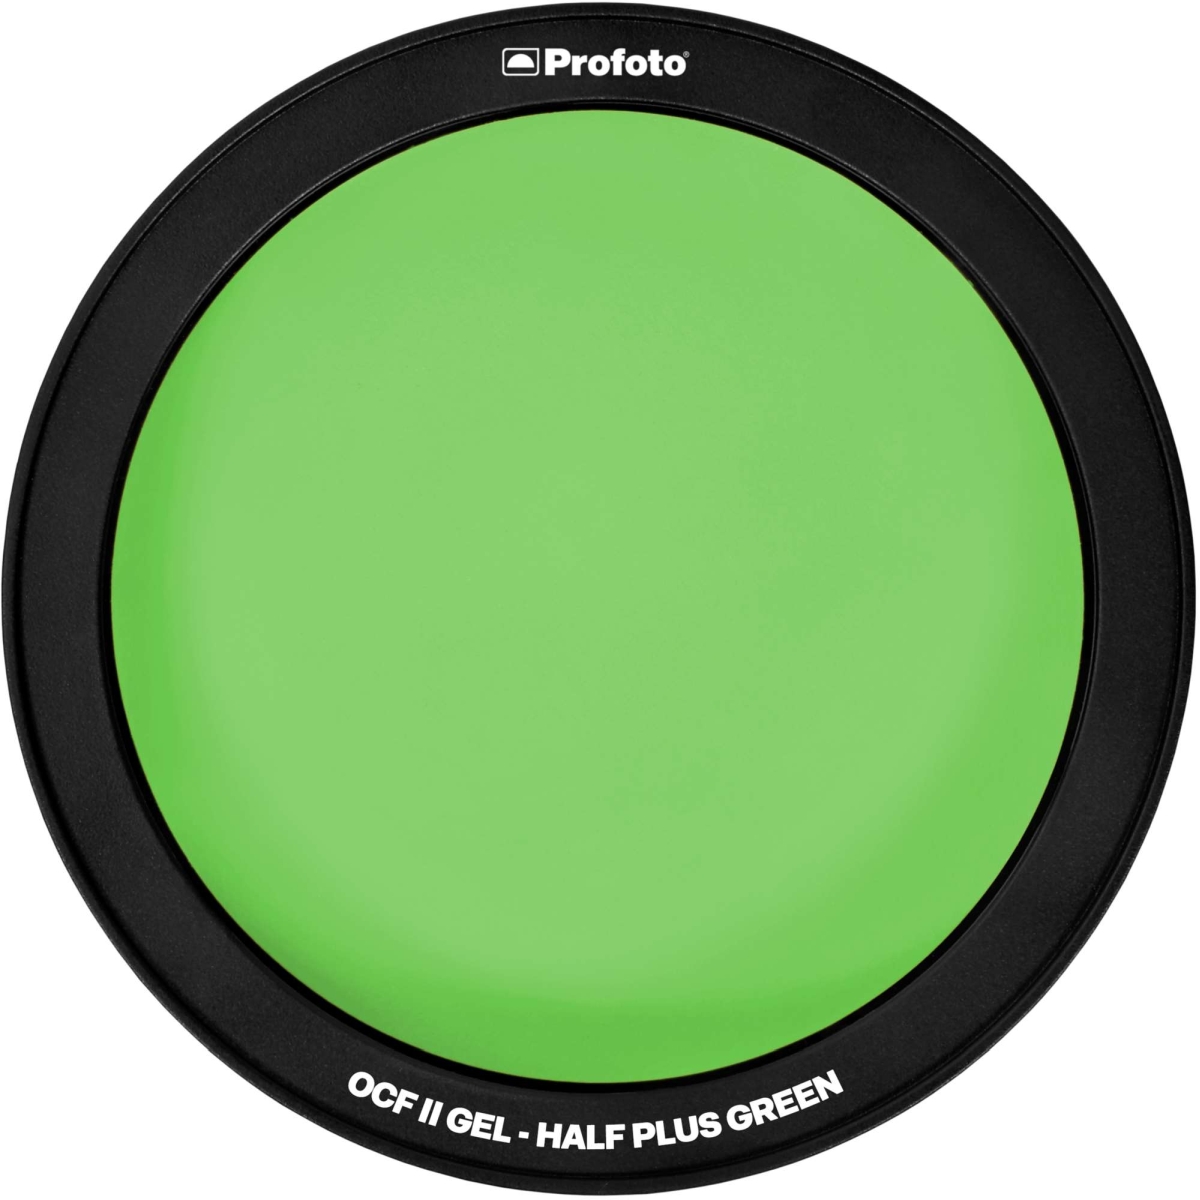 Profoto OCF II Gel Half Plus Green